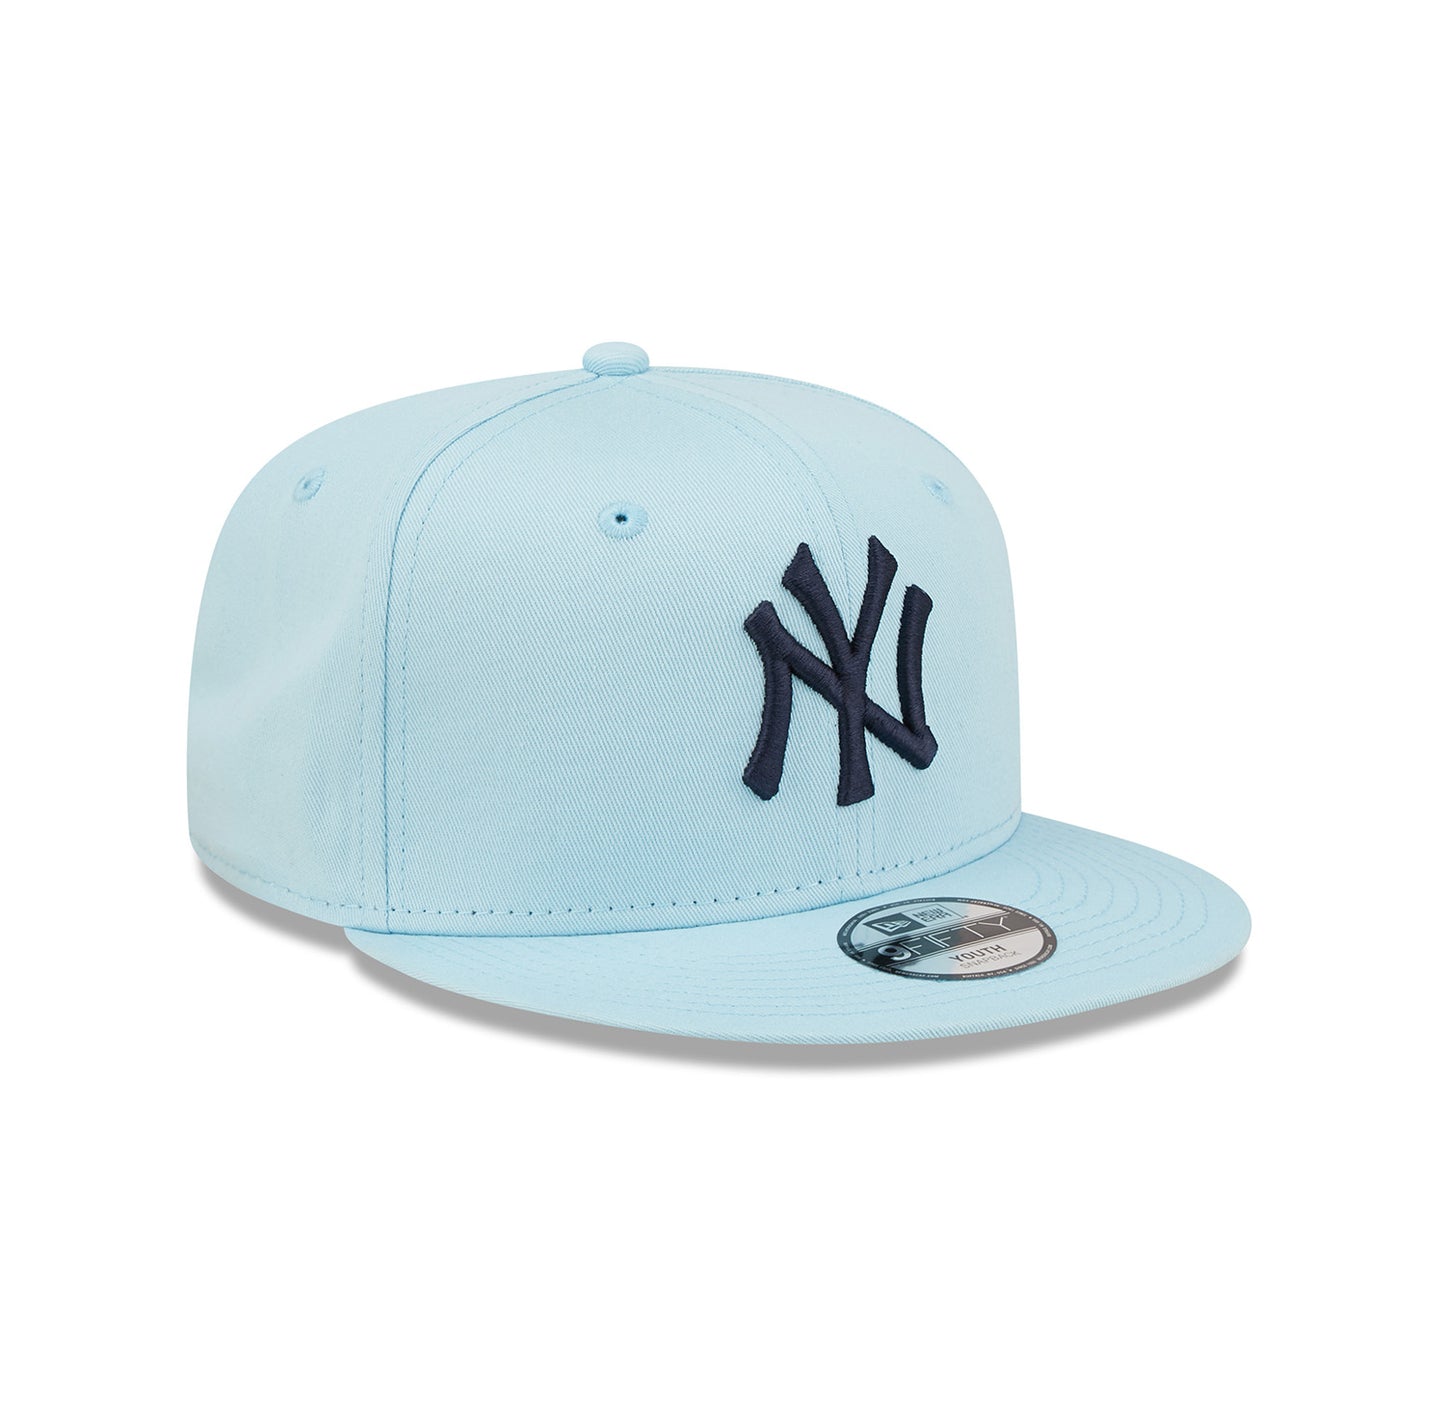 New Yankees New Era 9Fifty YOUTH Snap back Cap sky blue